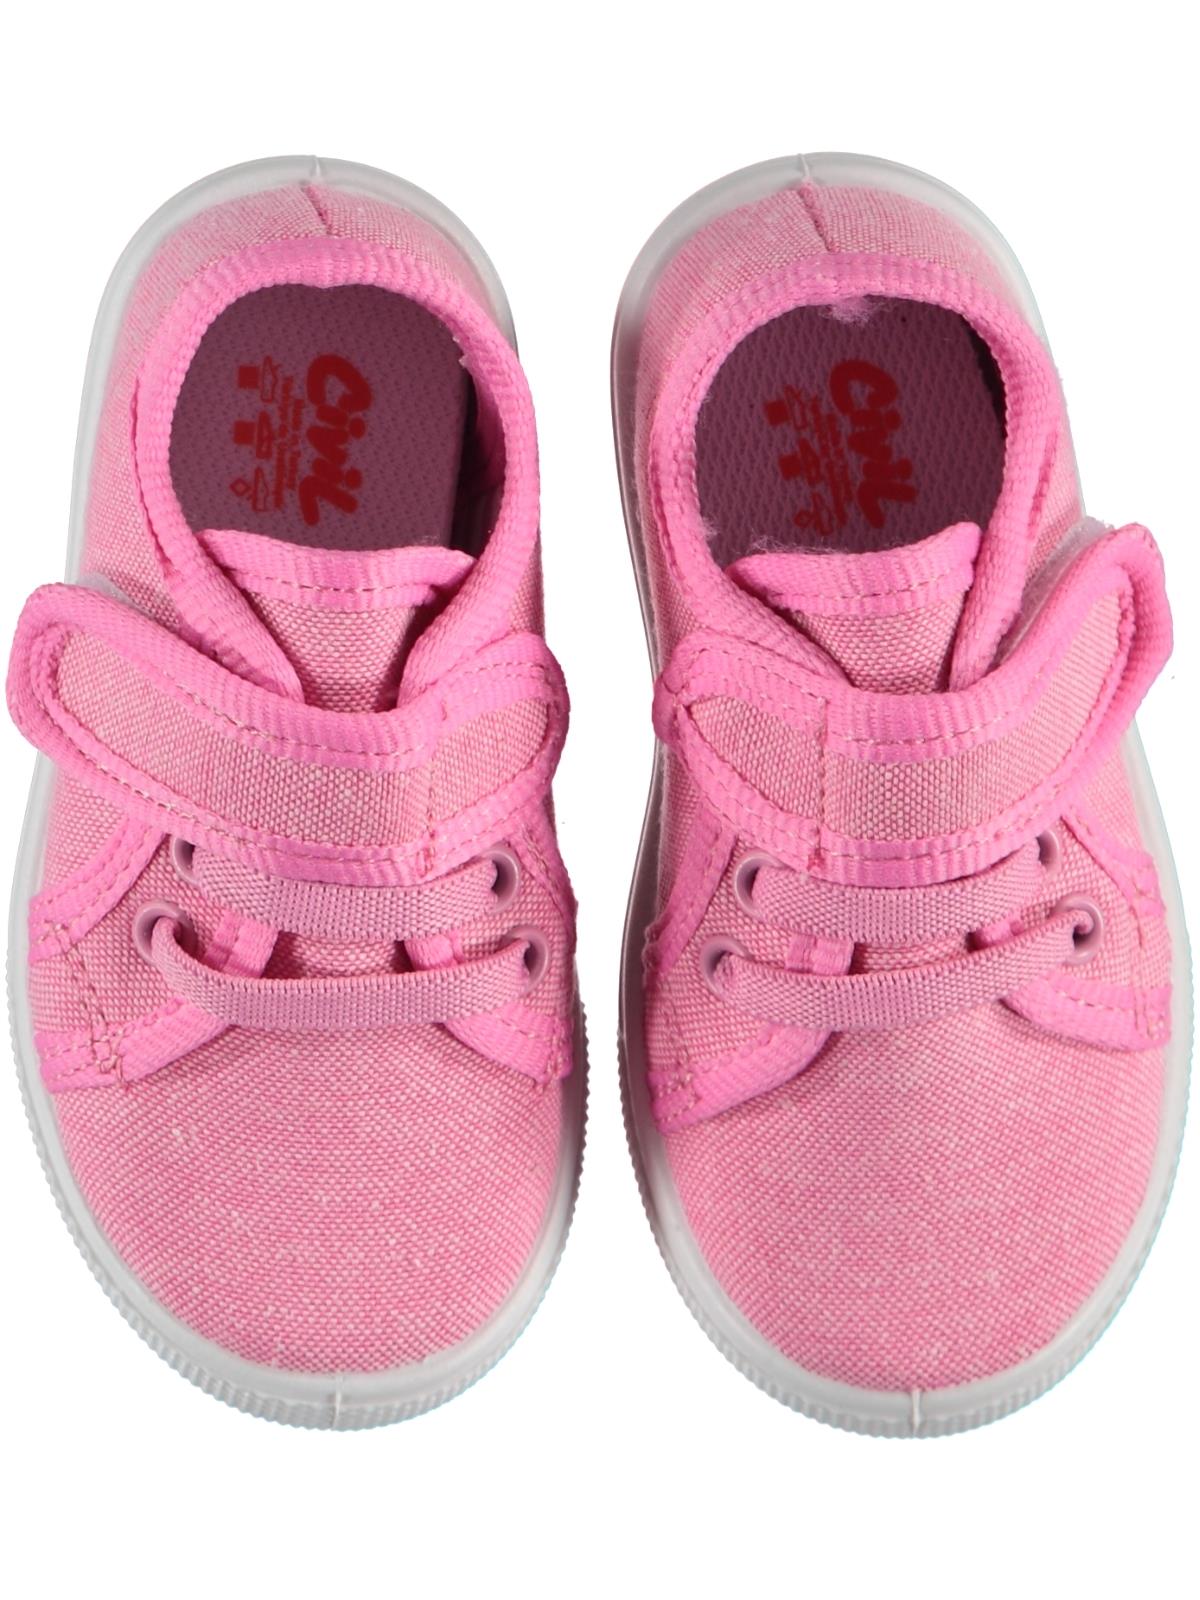 Civil Kız Bebek Keten Ayakkabı 21-25 Numara Pembe